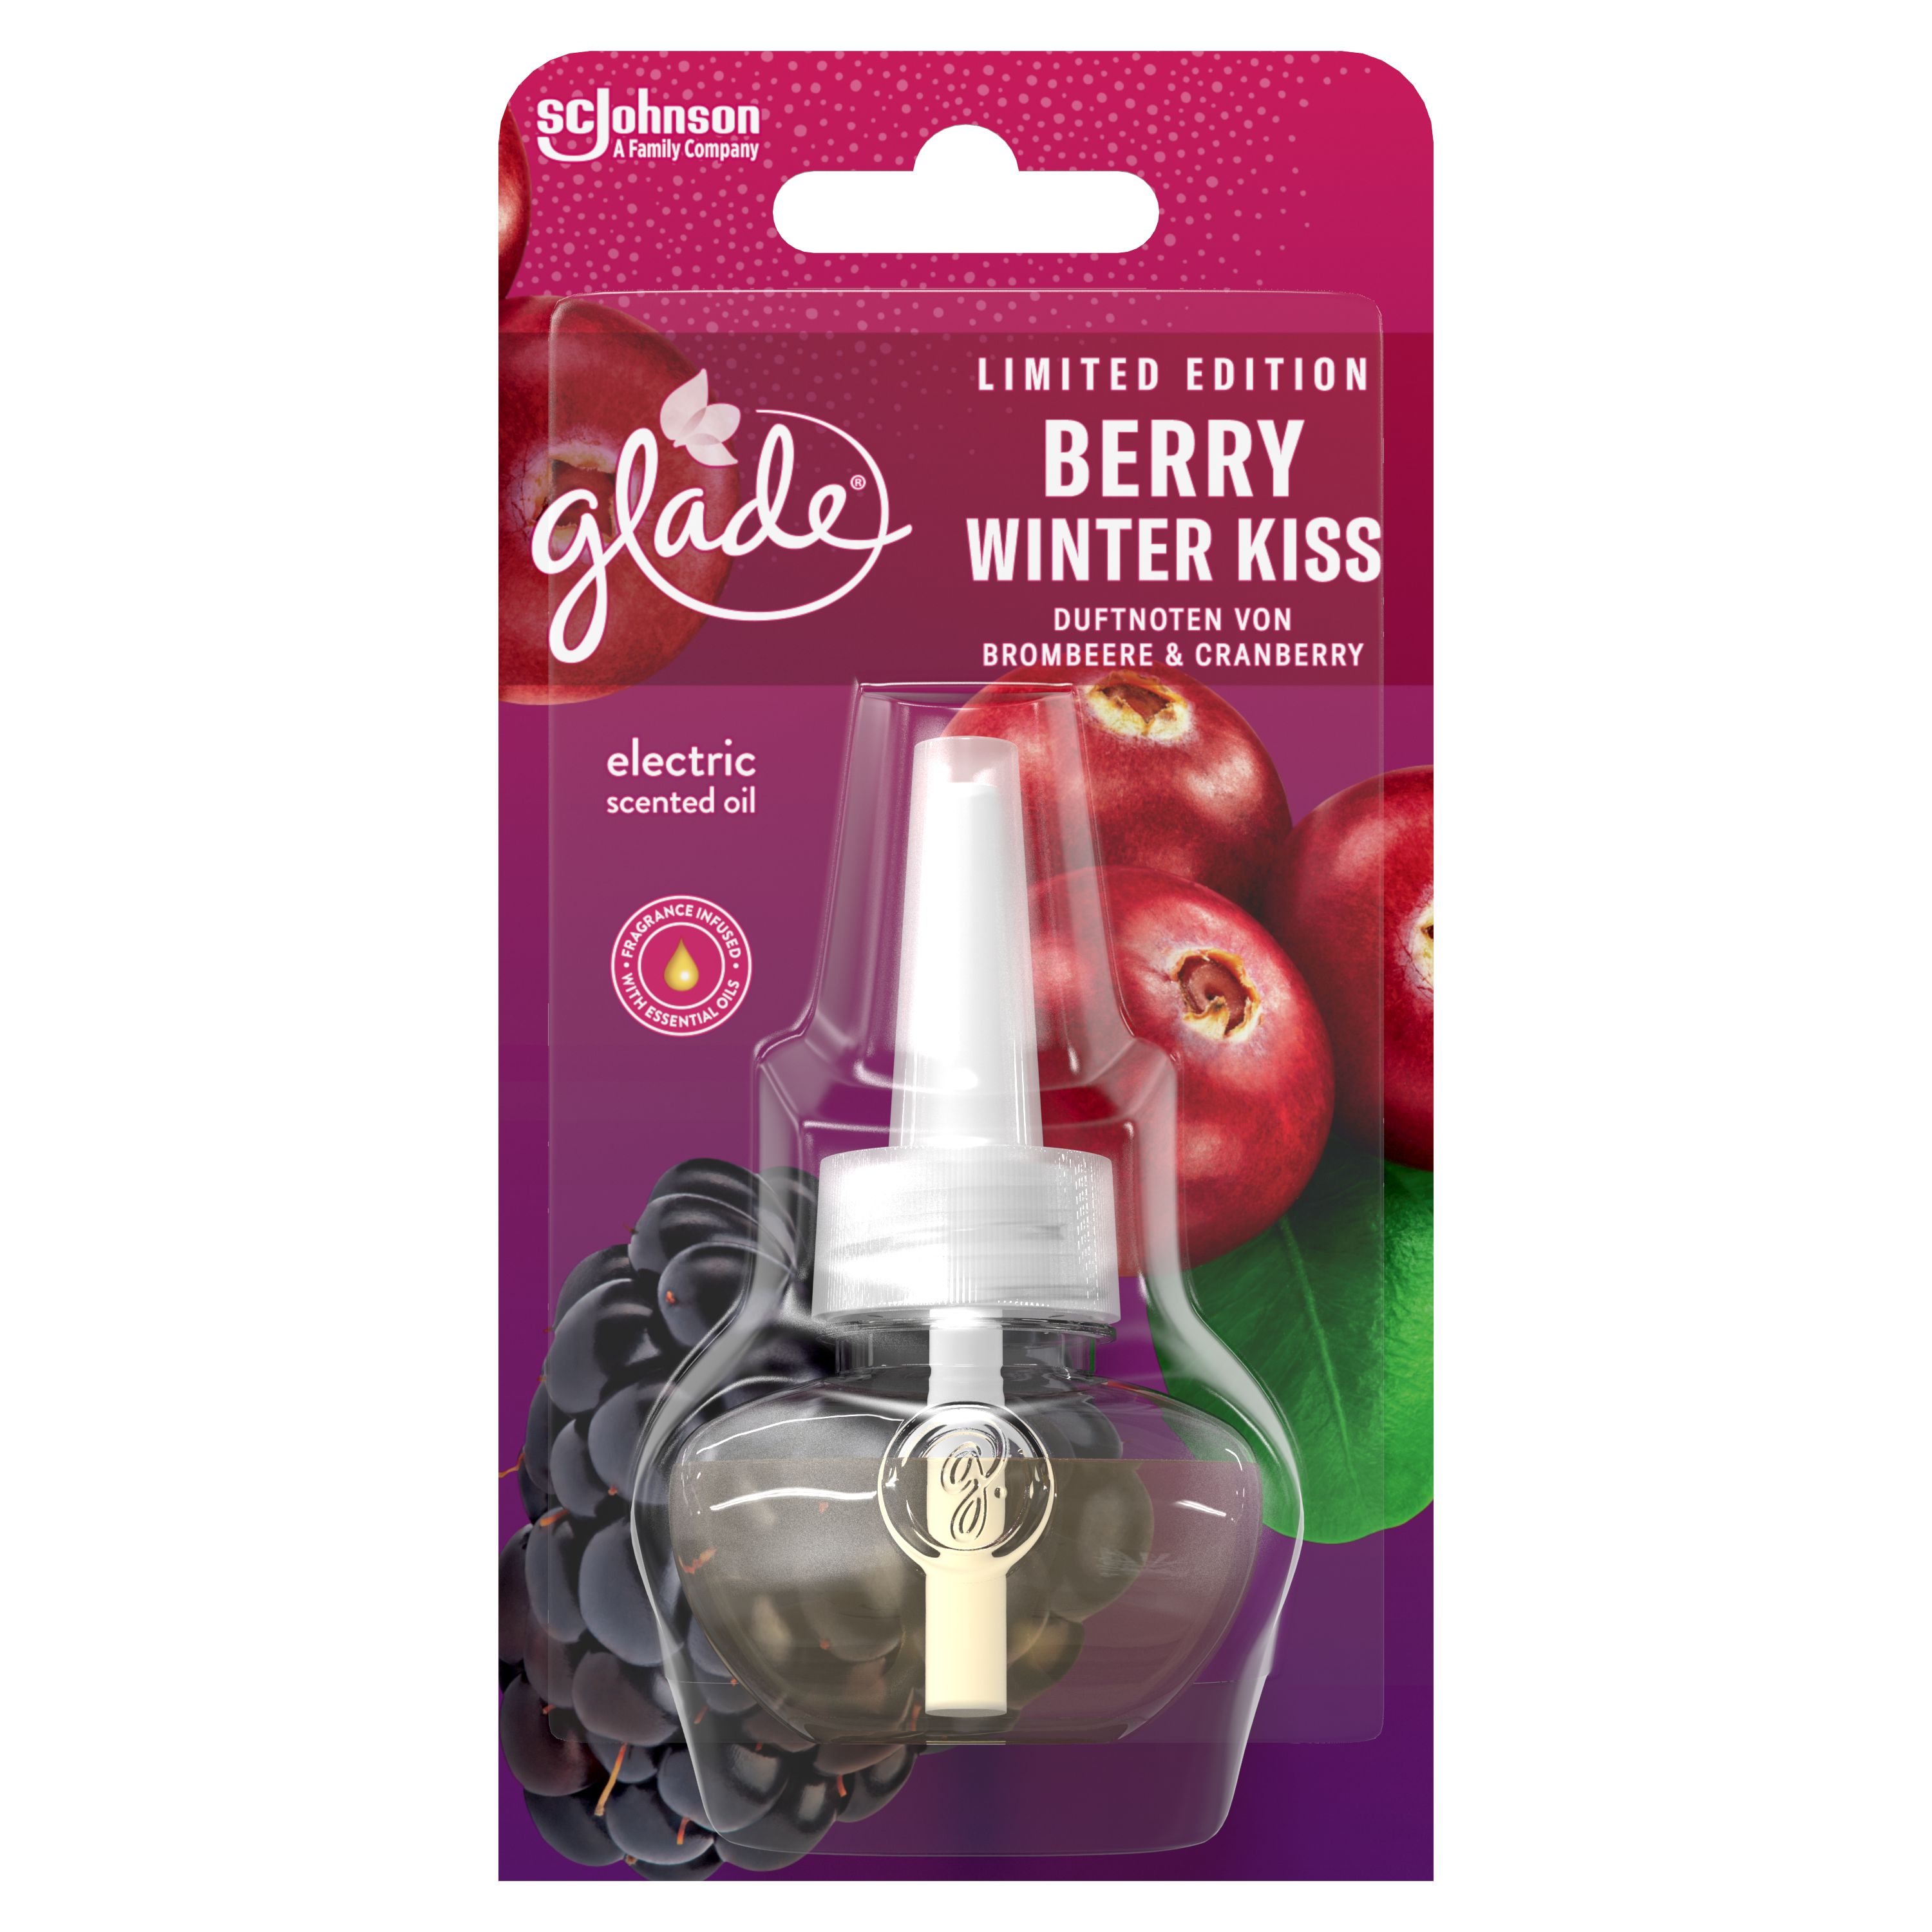 Glade® electric scented oil Duftstecker Nachfüller Berry Winter Kiss